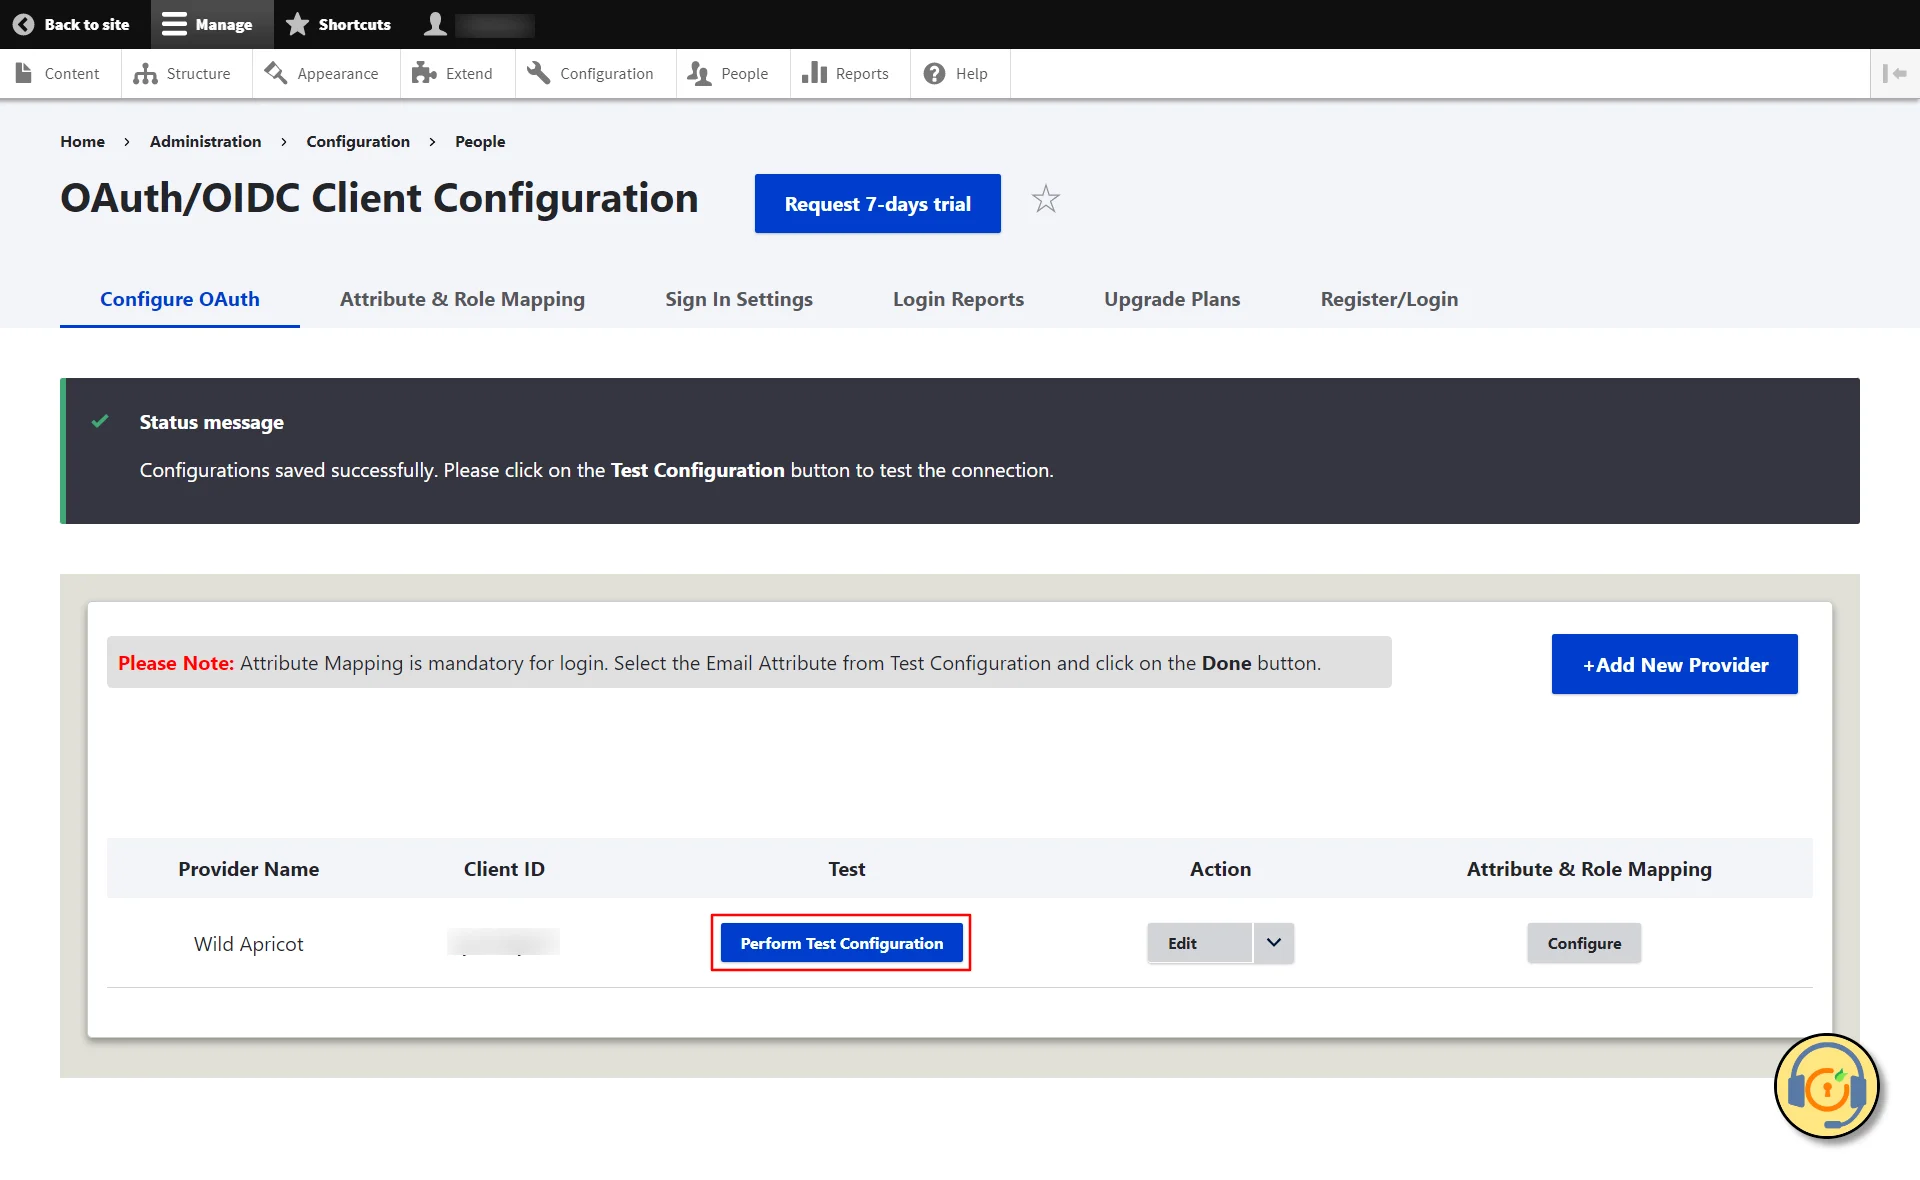 Wild Apricot sso login with drupal OAuth OpenID Single Single On DeviantArt test Configuration